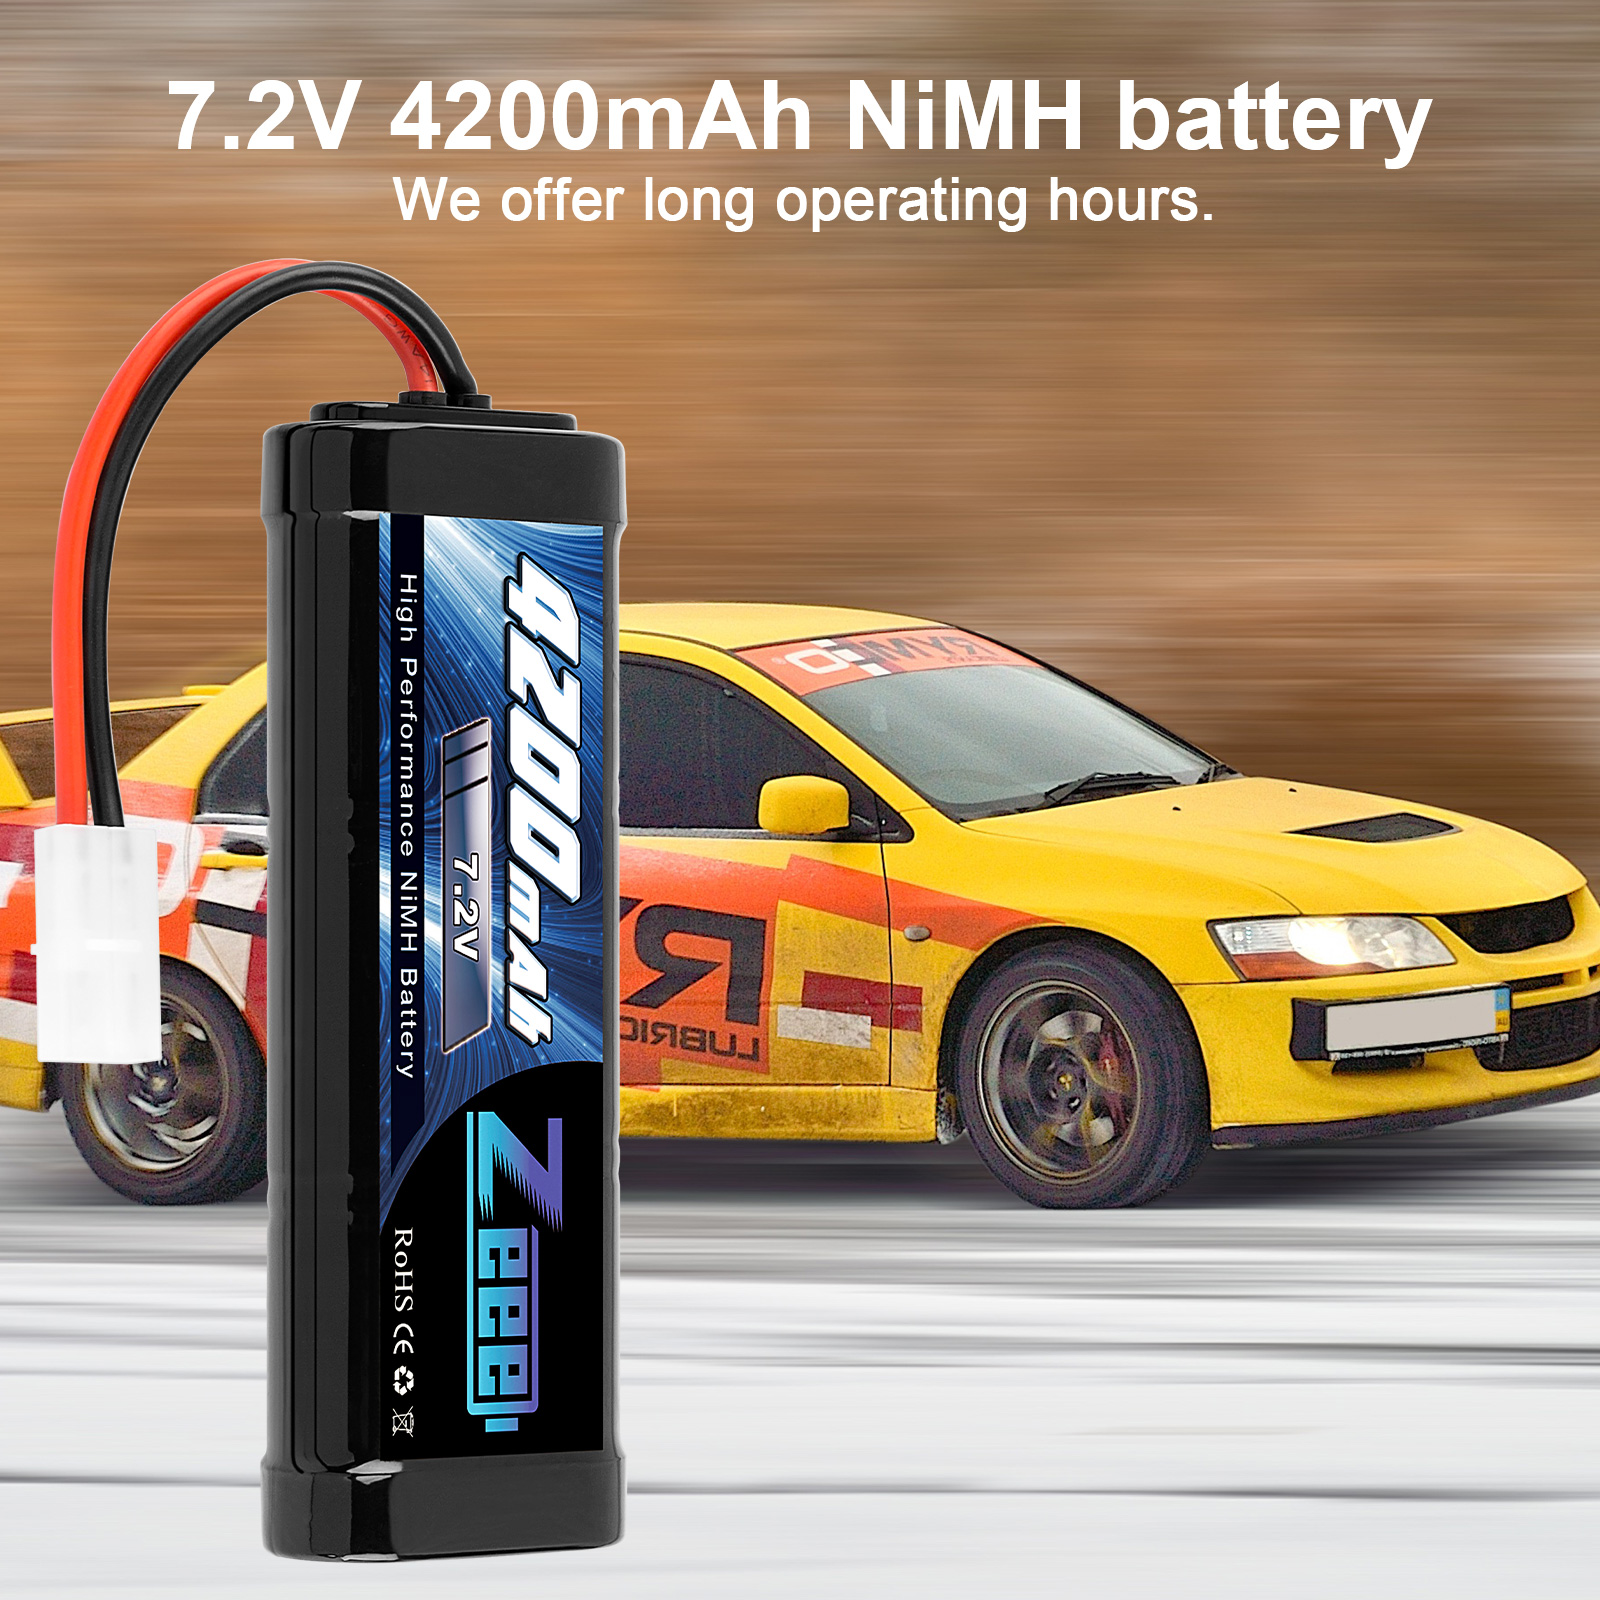 7.2V 4200mAh NIMH battery